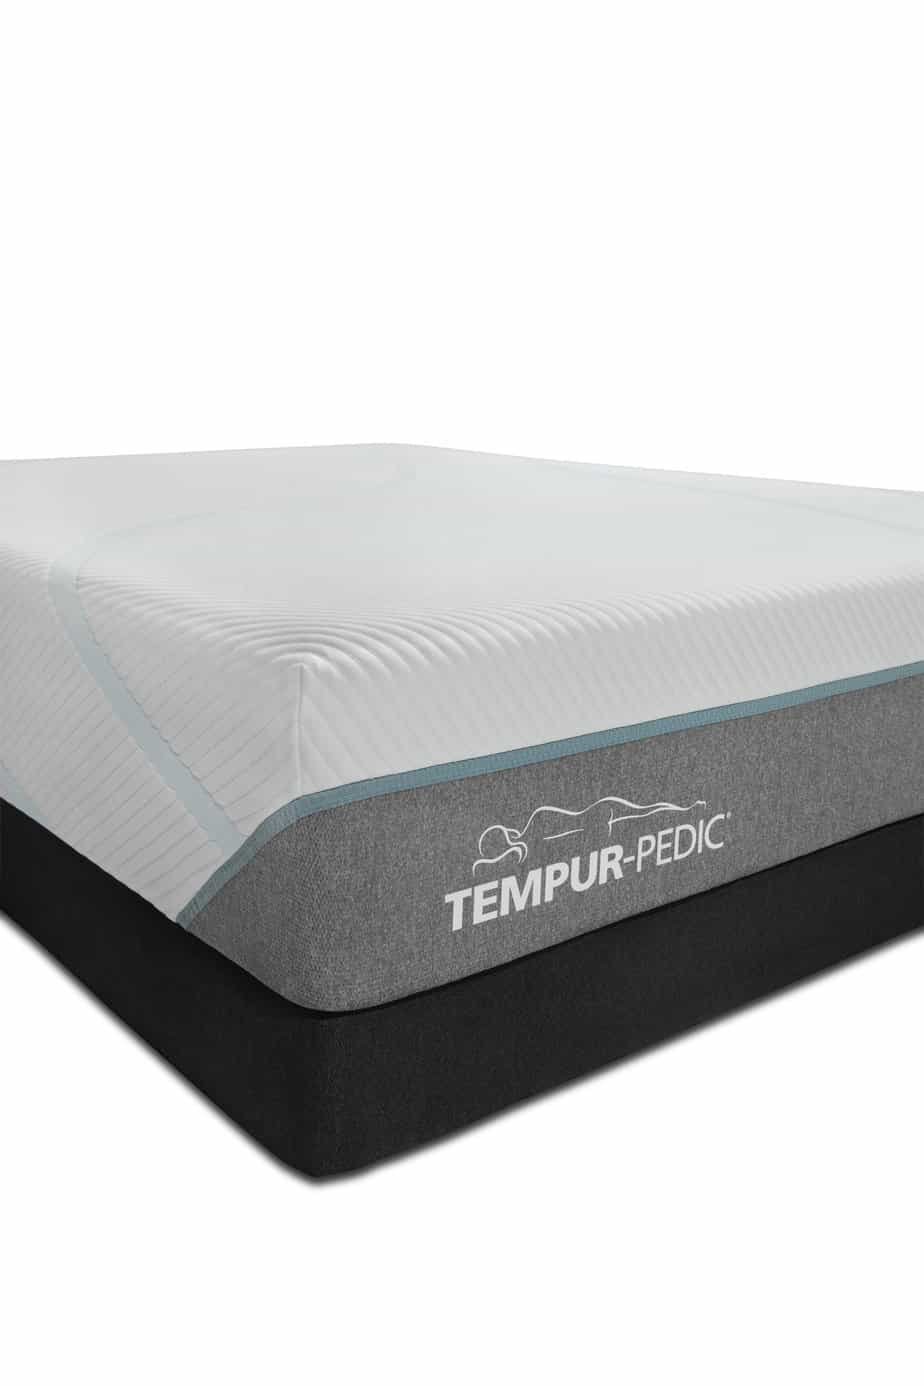 TEMPUR - Adapt Medium Hybrid - Boise Mattress